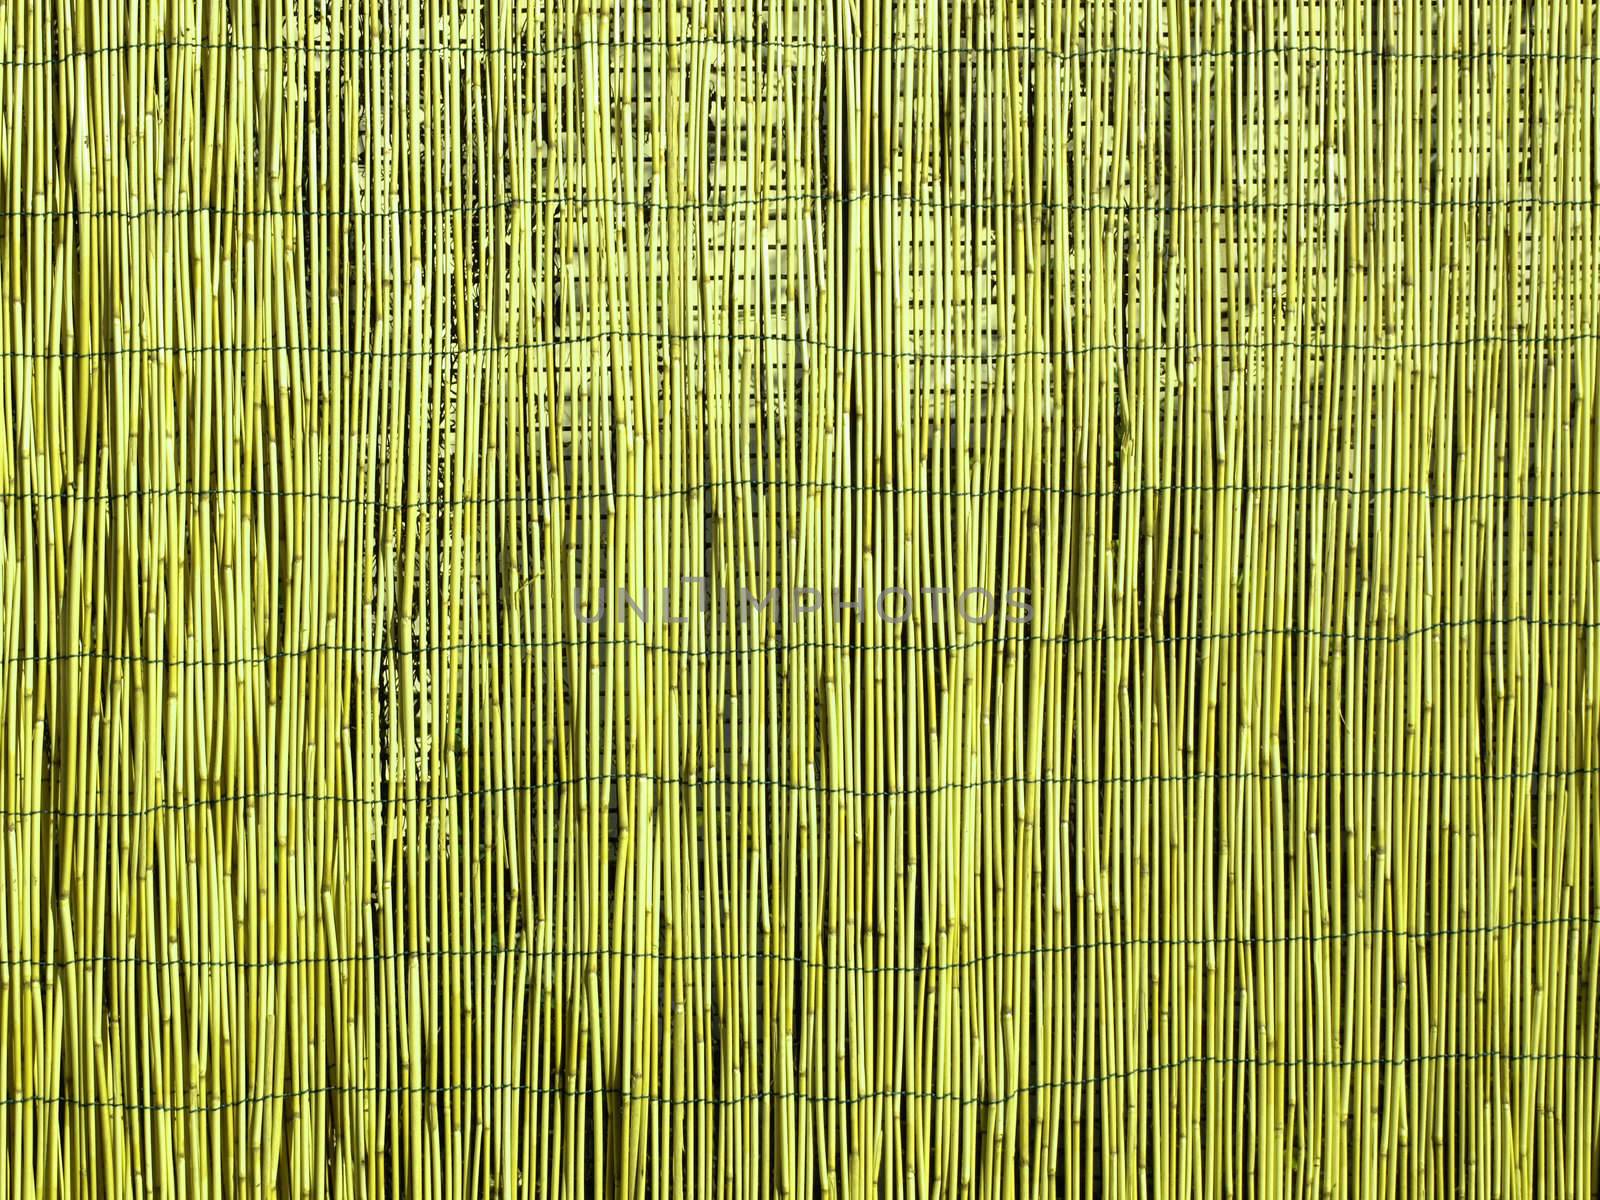 Bamboo background by claudiodivizia